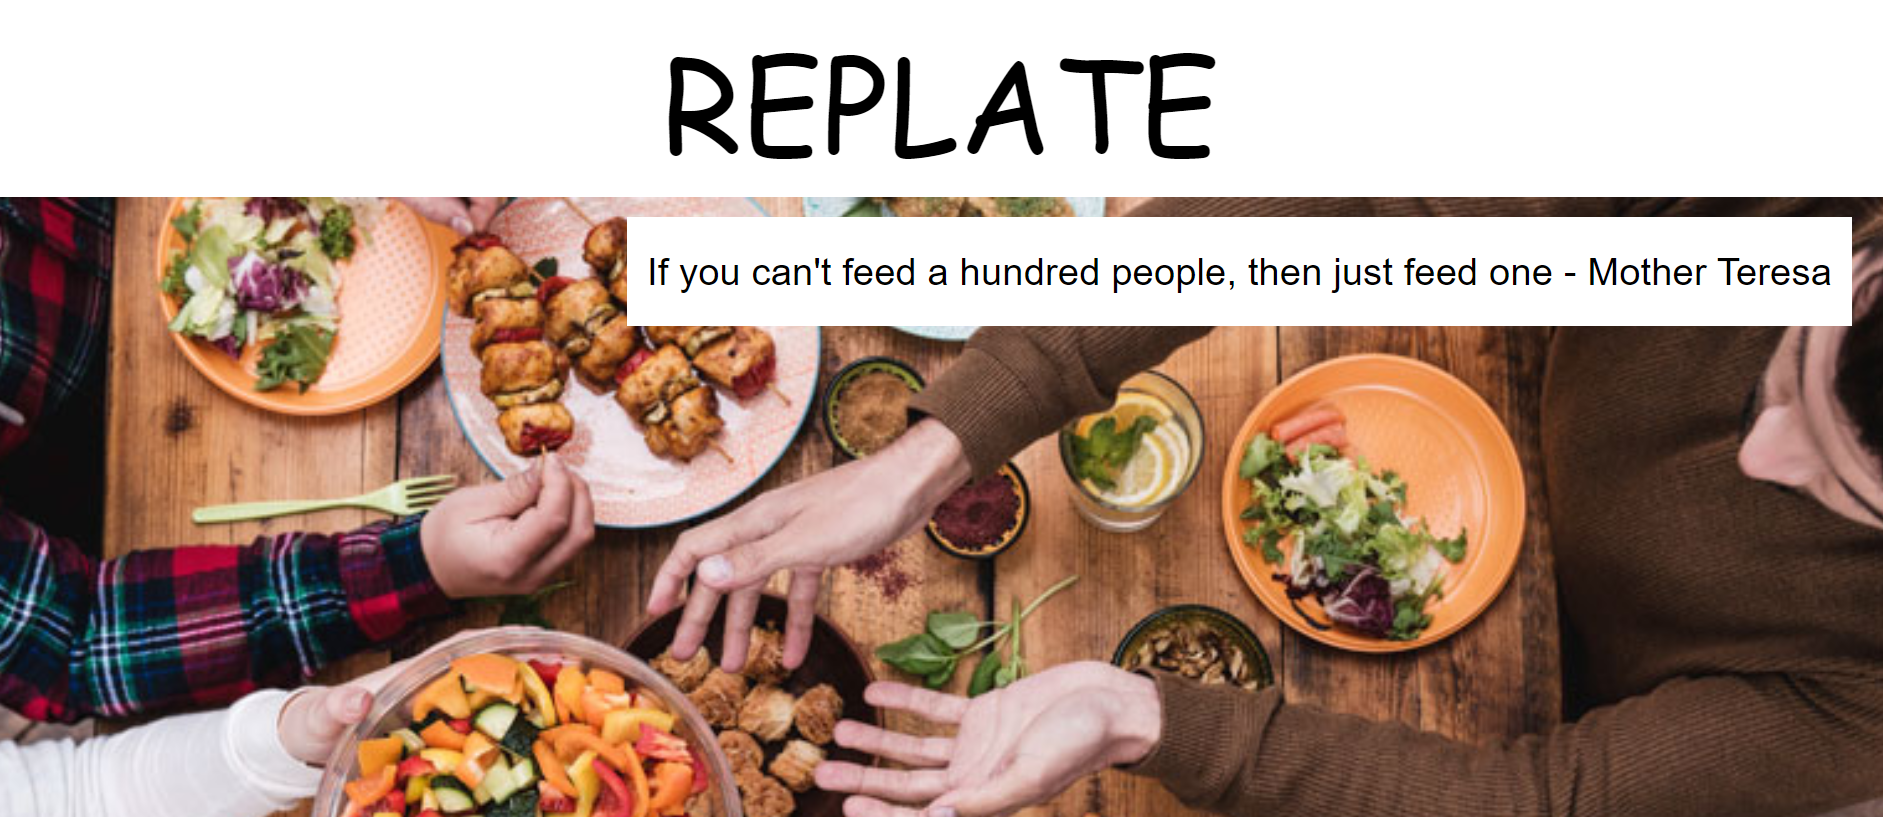 Replate Food Saving Application Home Page